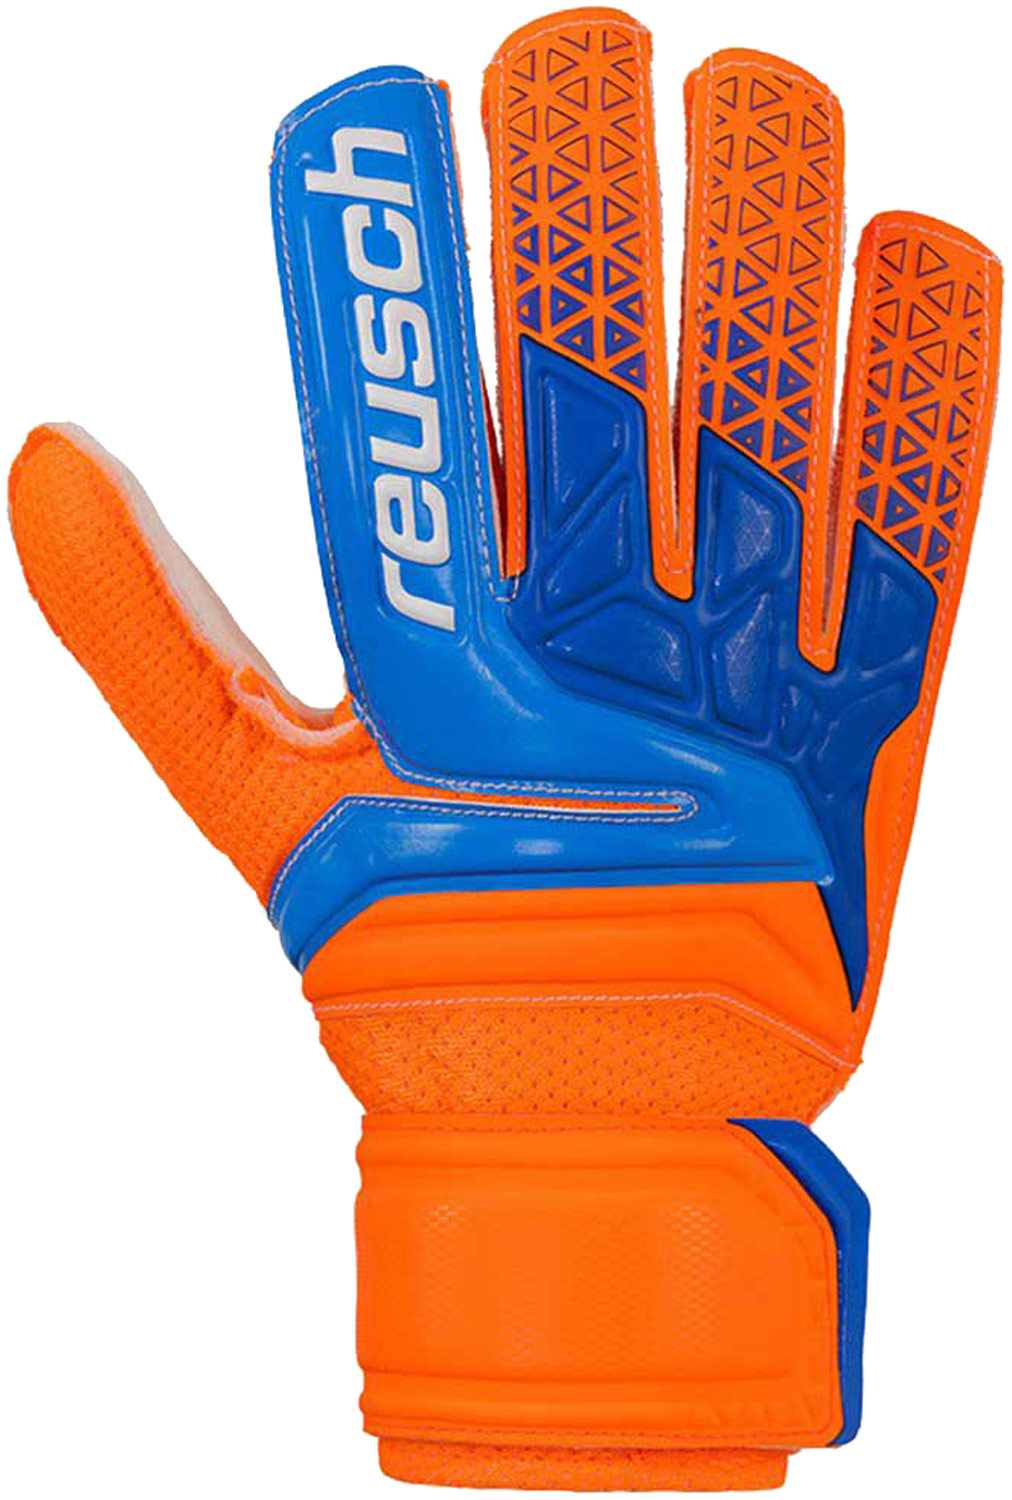 Chiildren’s goalkeeper gloves